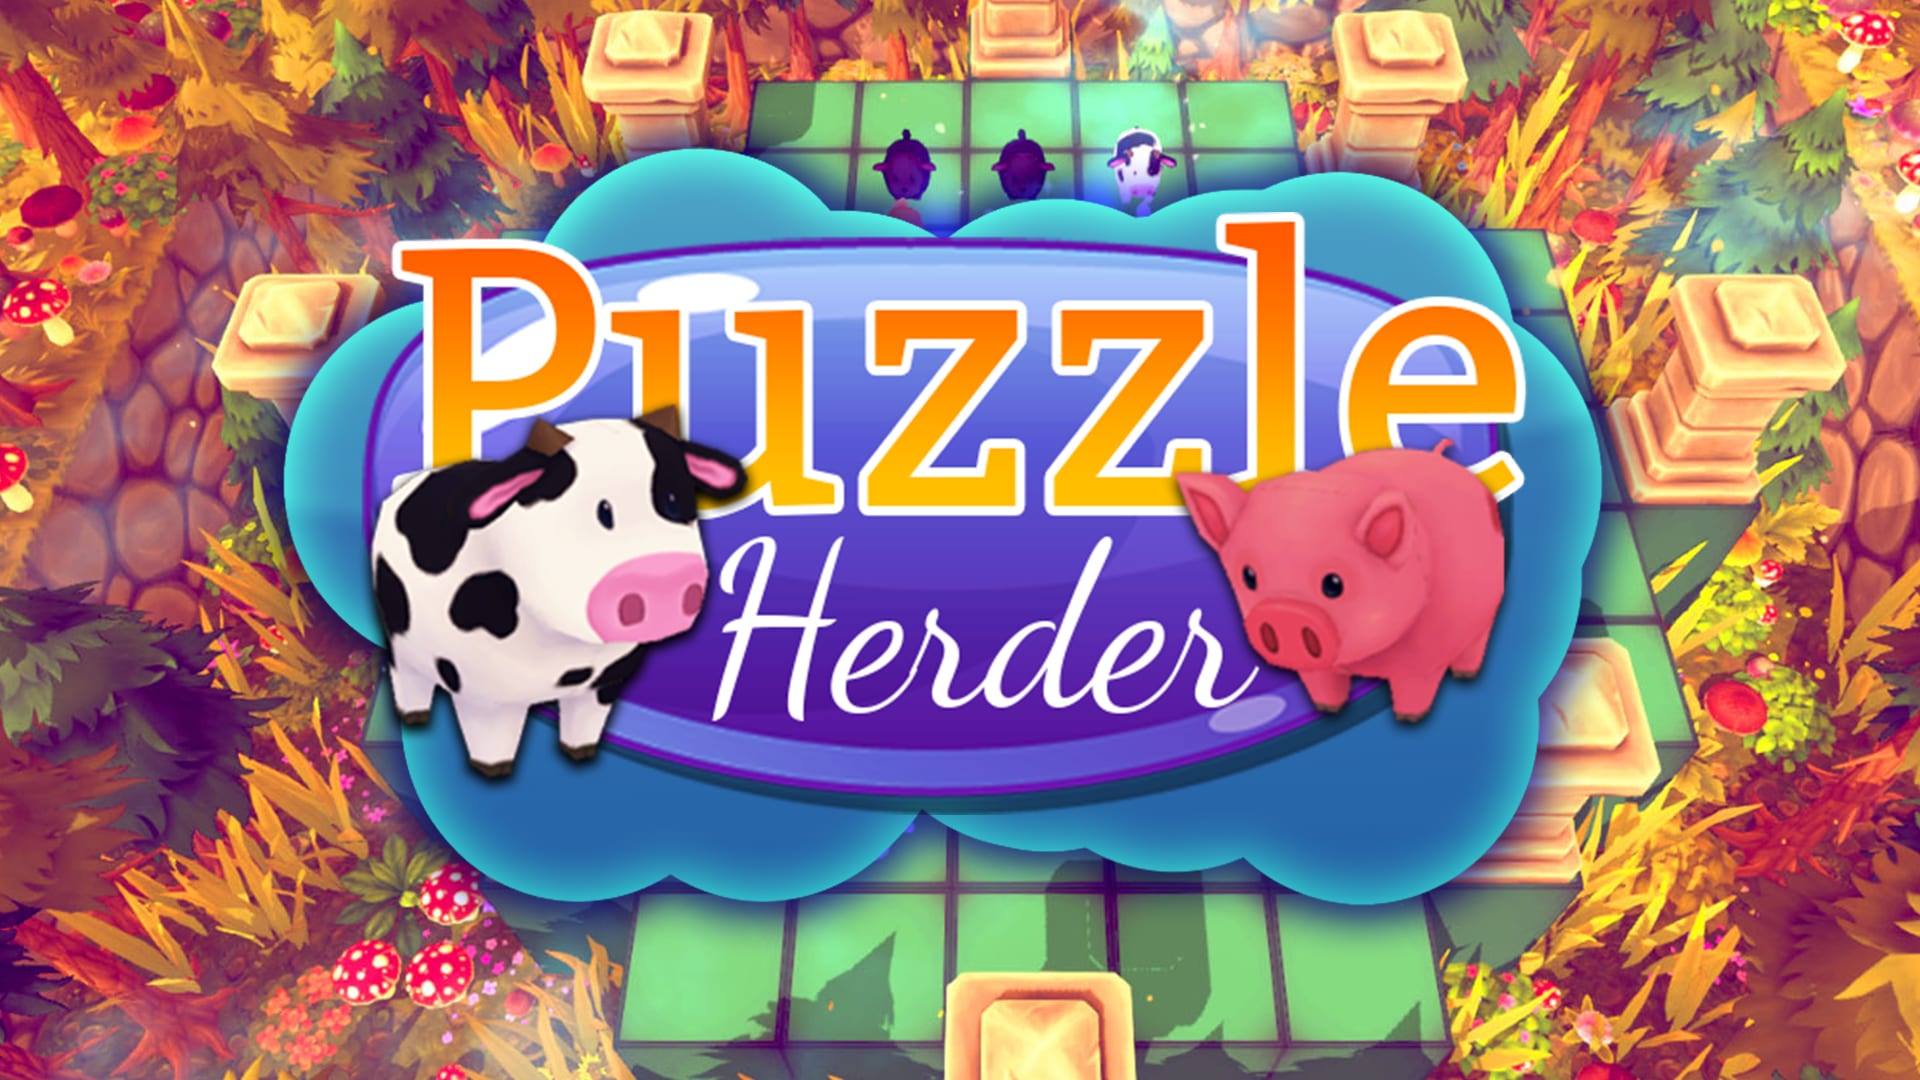 Puzzle Herder 1